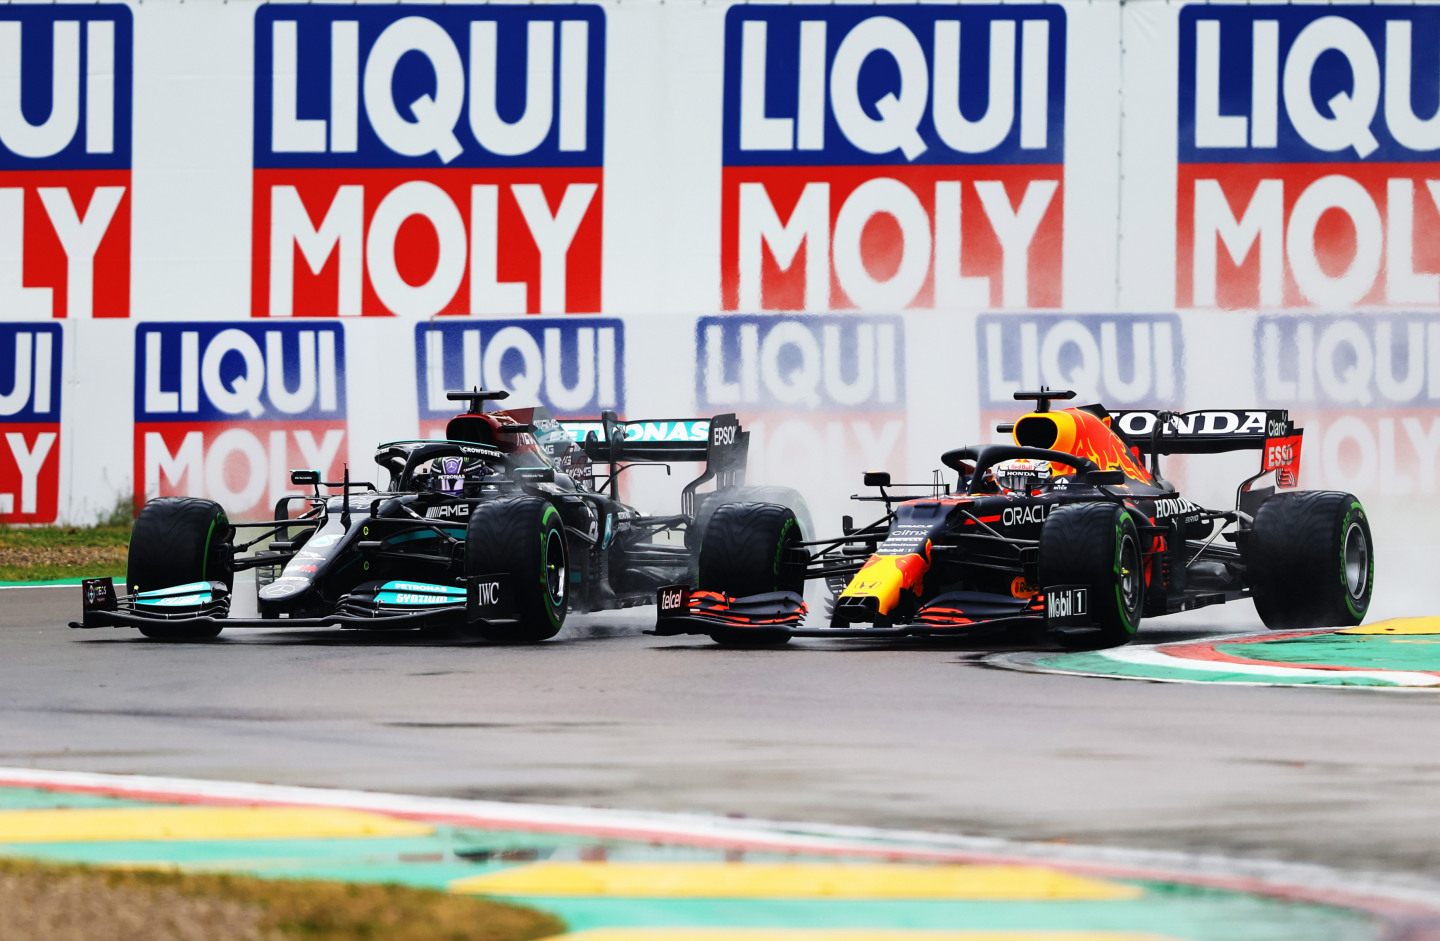 В 14-ти гонках сезона Макс Ферстаппен и Льюис Хэмилтон заняли два первых места © Red Bull Content Pool / Getty Images